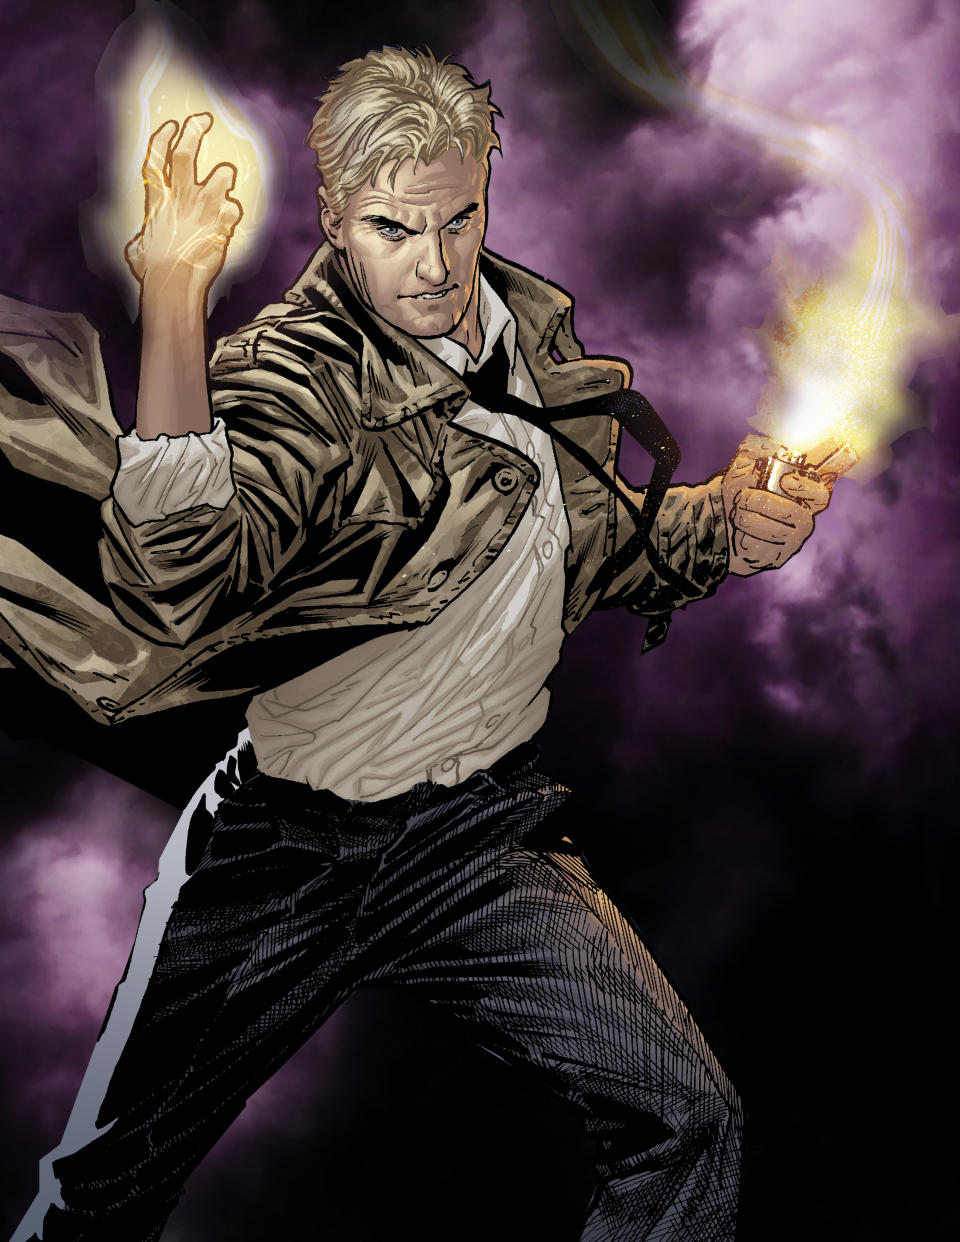 Adaptations Of Spanish Drama ‘Mysteries Of Laura’, DC Comic ‘Constantine’ Get NBC Pilot Orders